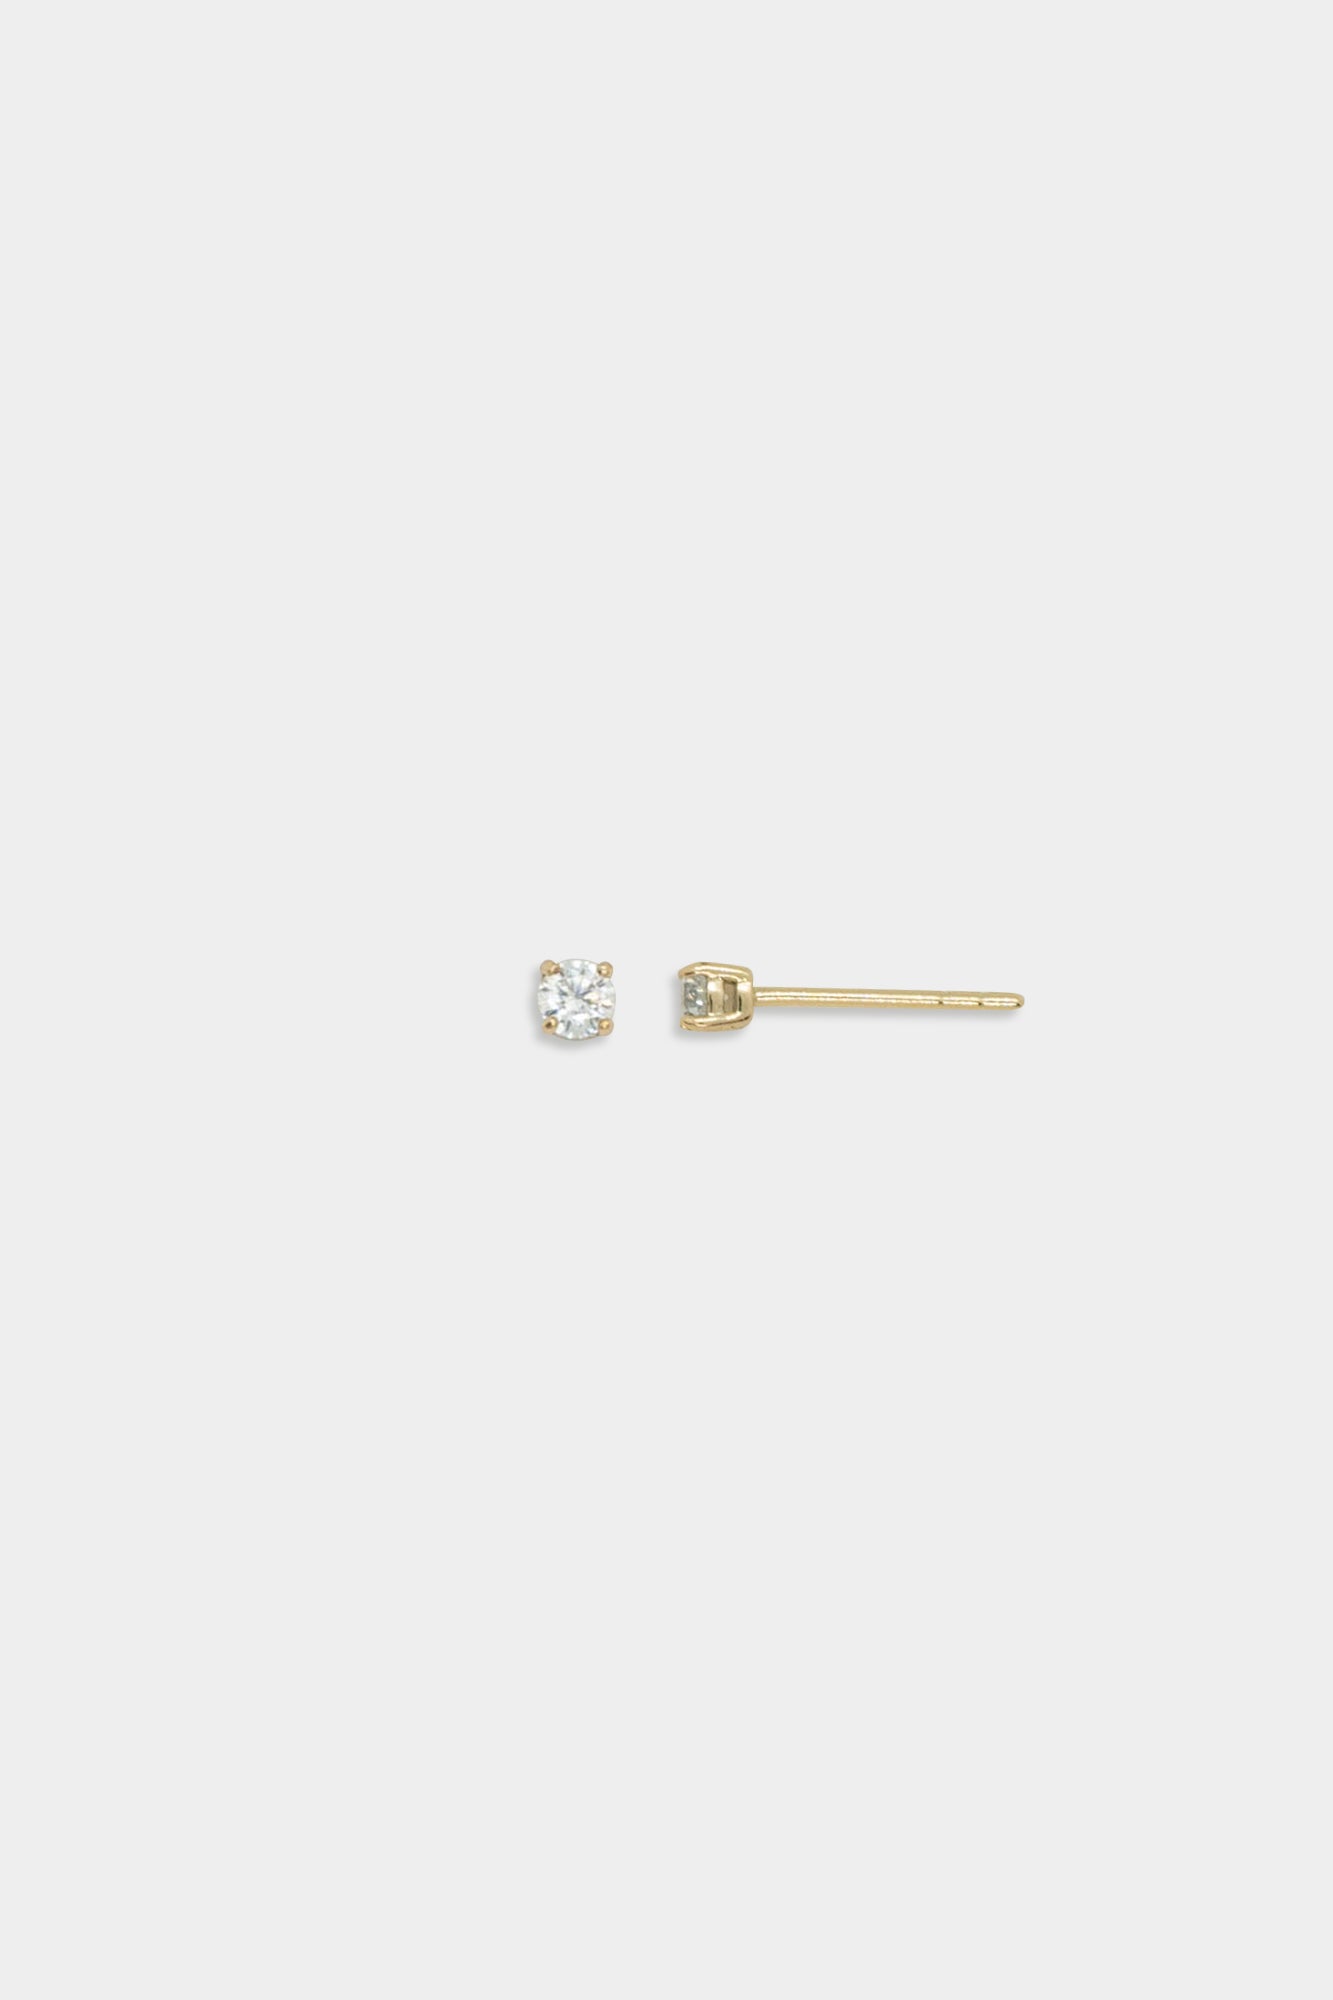 Soleil 18k Gold Stud Earring in Crystal Clear (3mm)